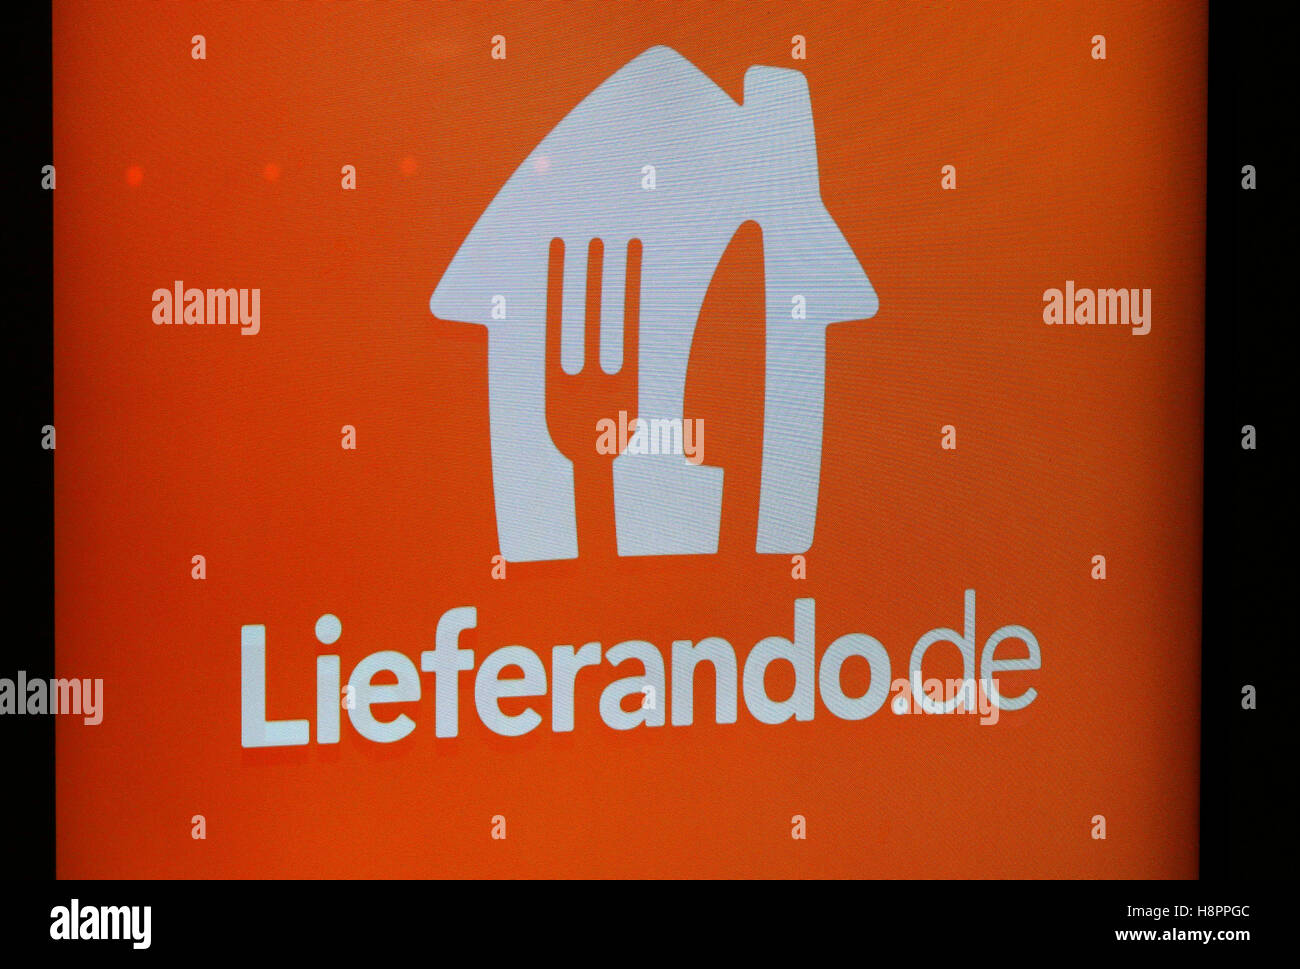 Das Logo der Marke "Lieferando", Berlin. Stockfoto